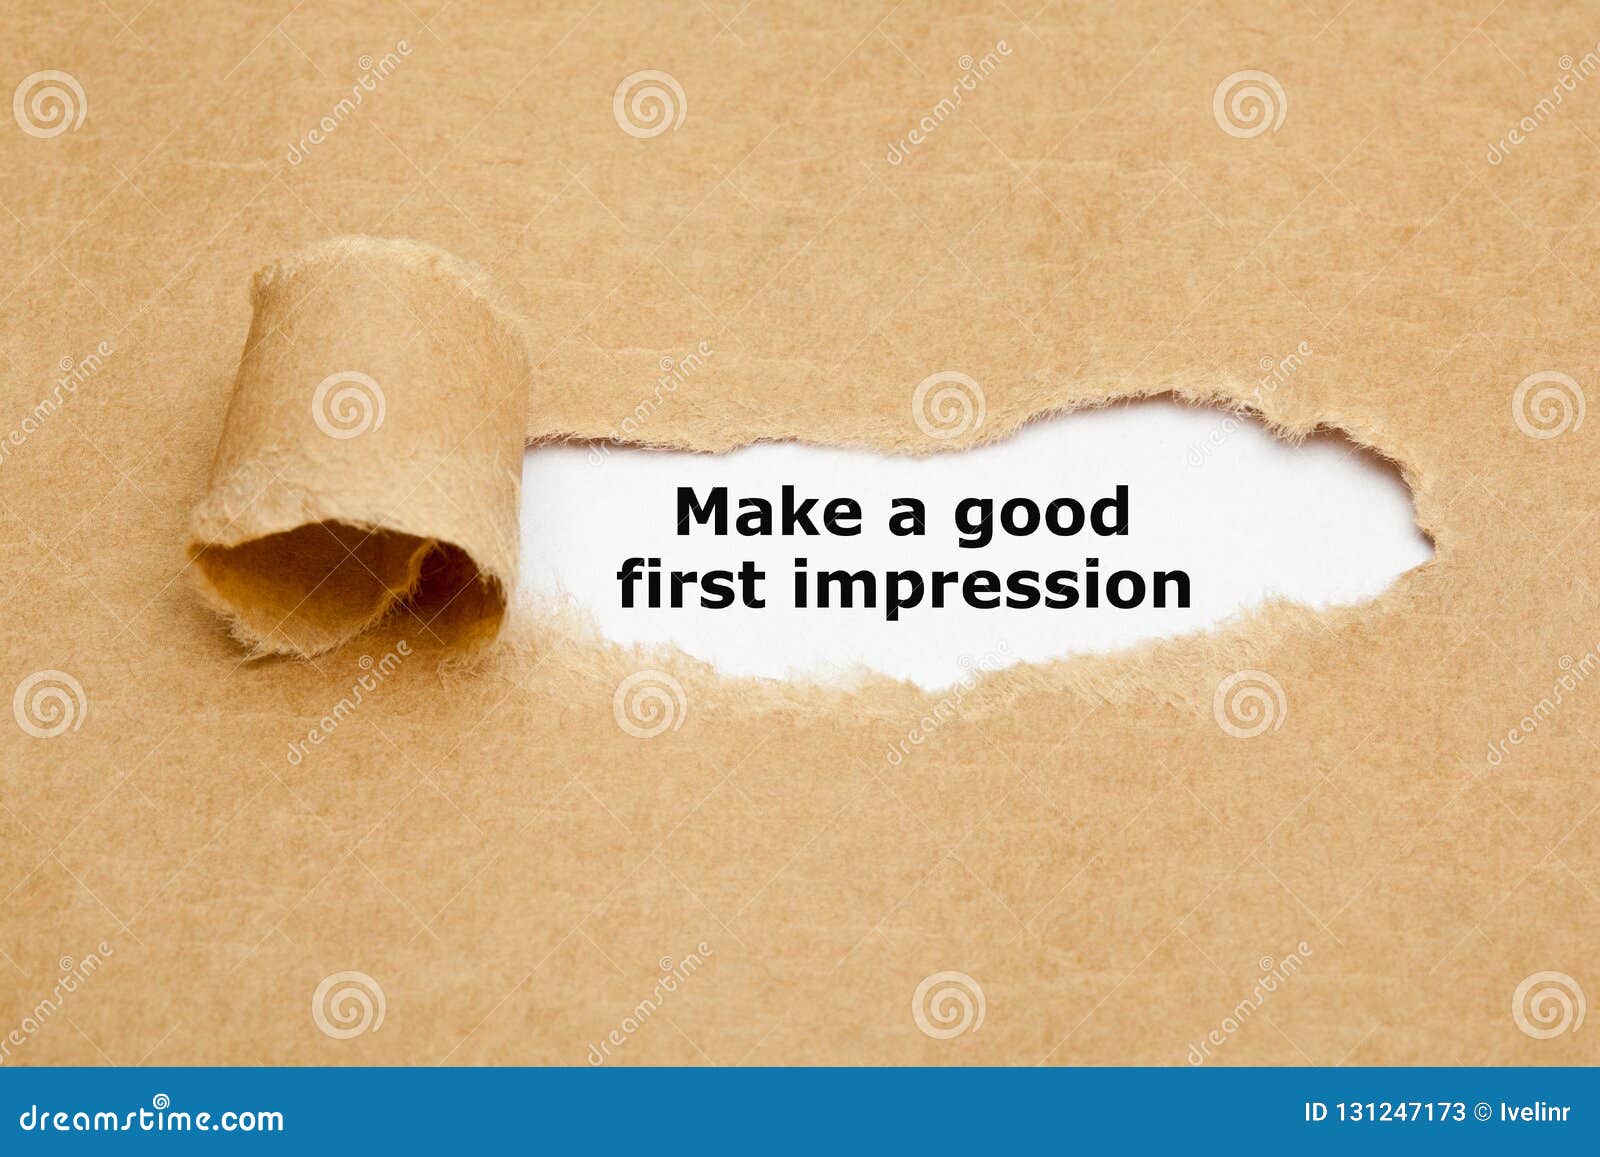 make a good first impression